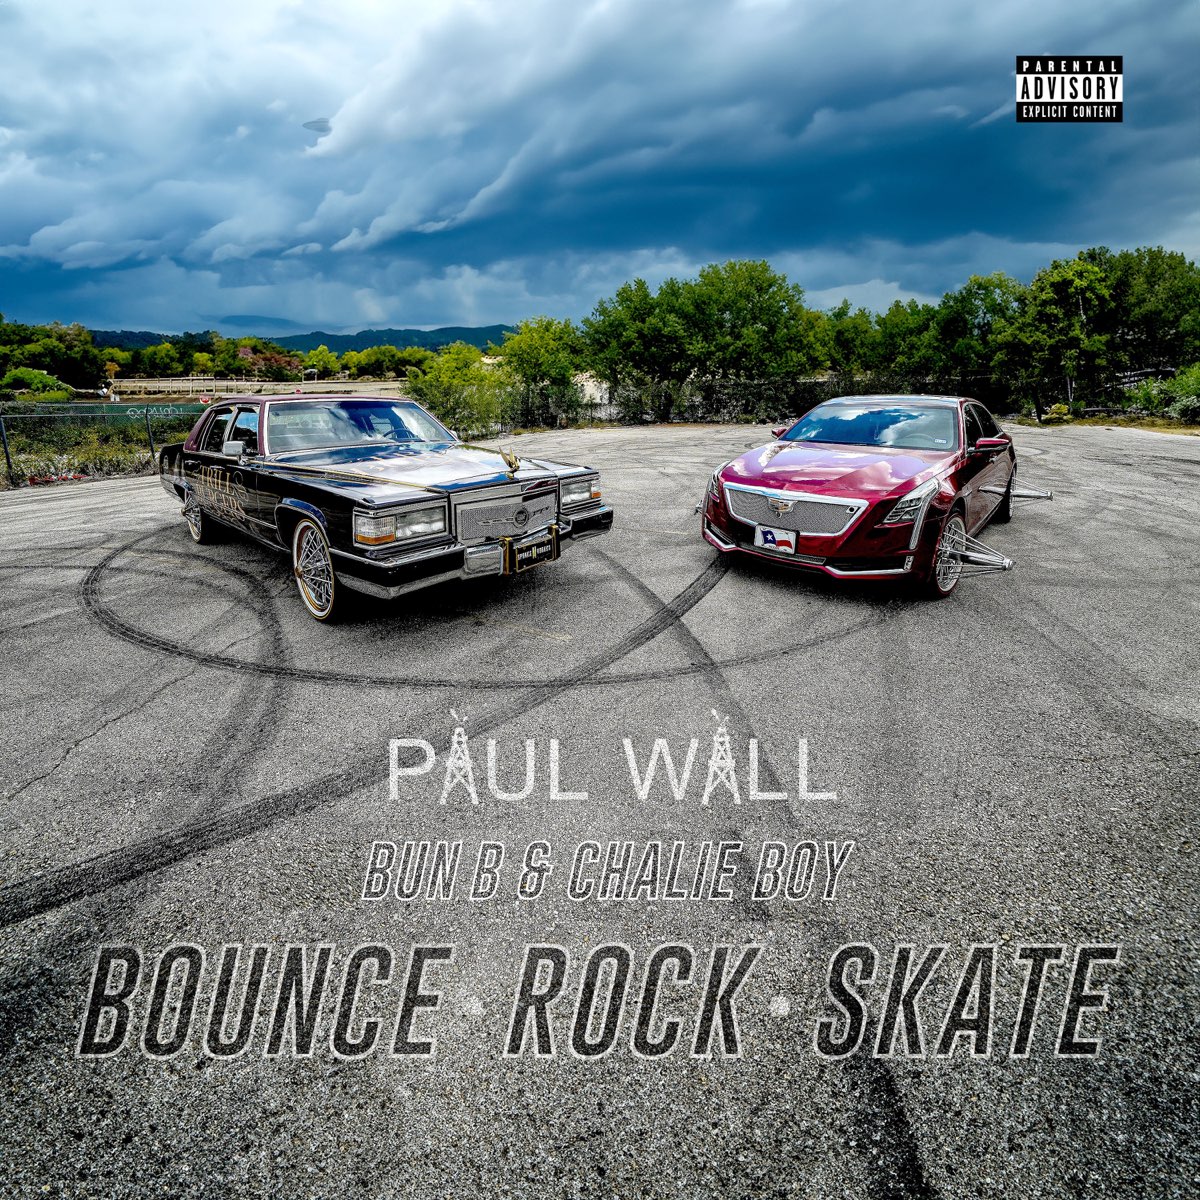 Paul Wall, Bun B, & Chalie Boy — Bounce, Rock, Skate cover artwork